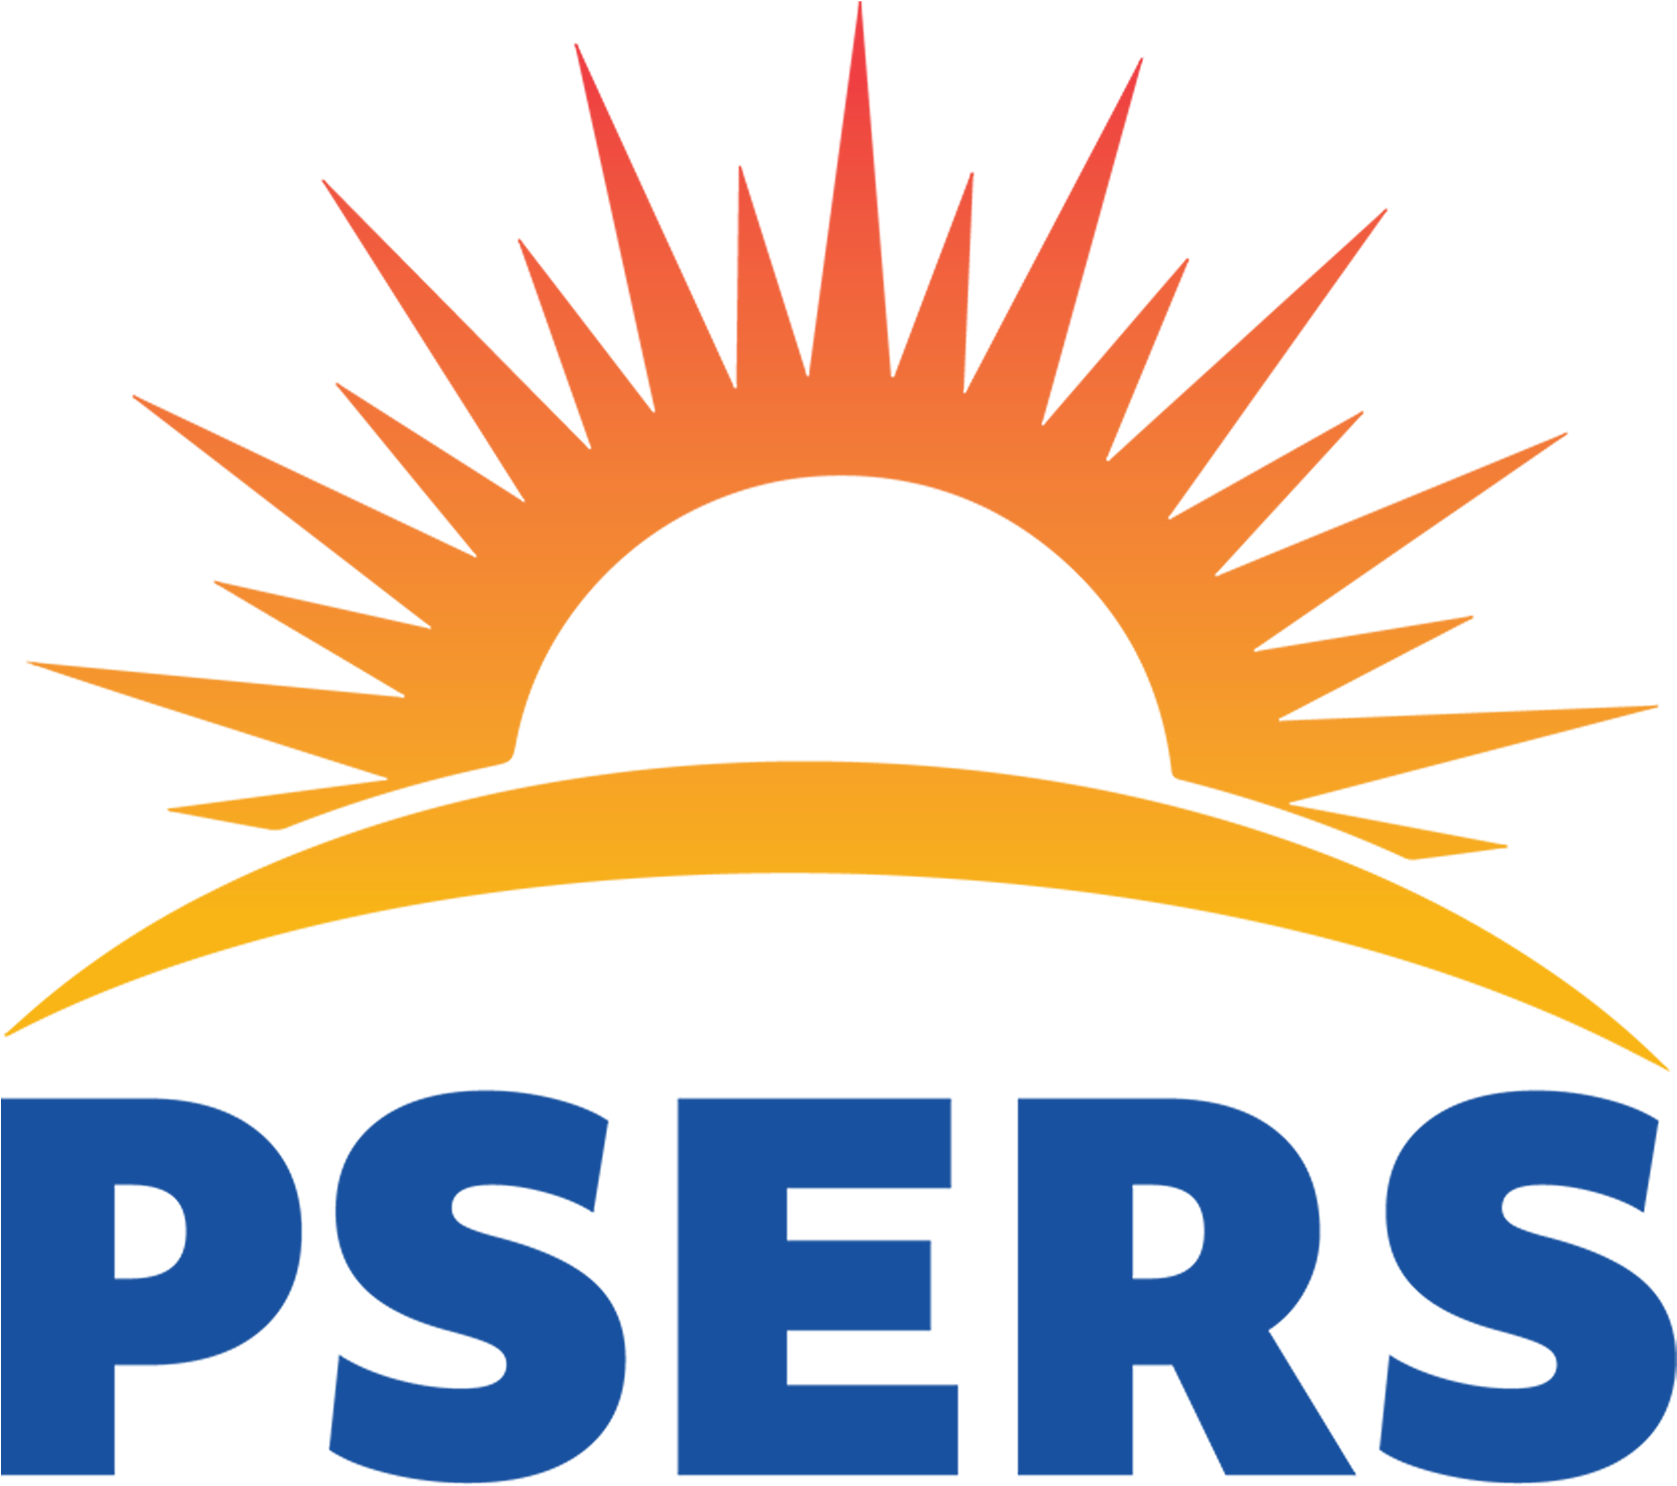 P S E R S Logo Pennsylvania Retirement System PNG image